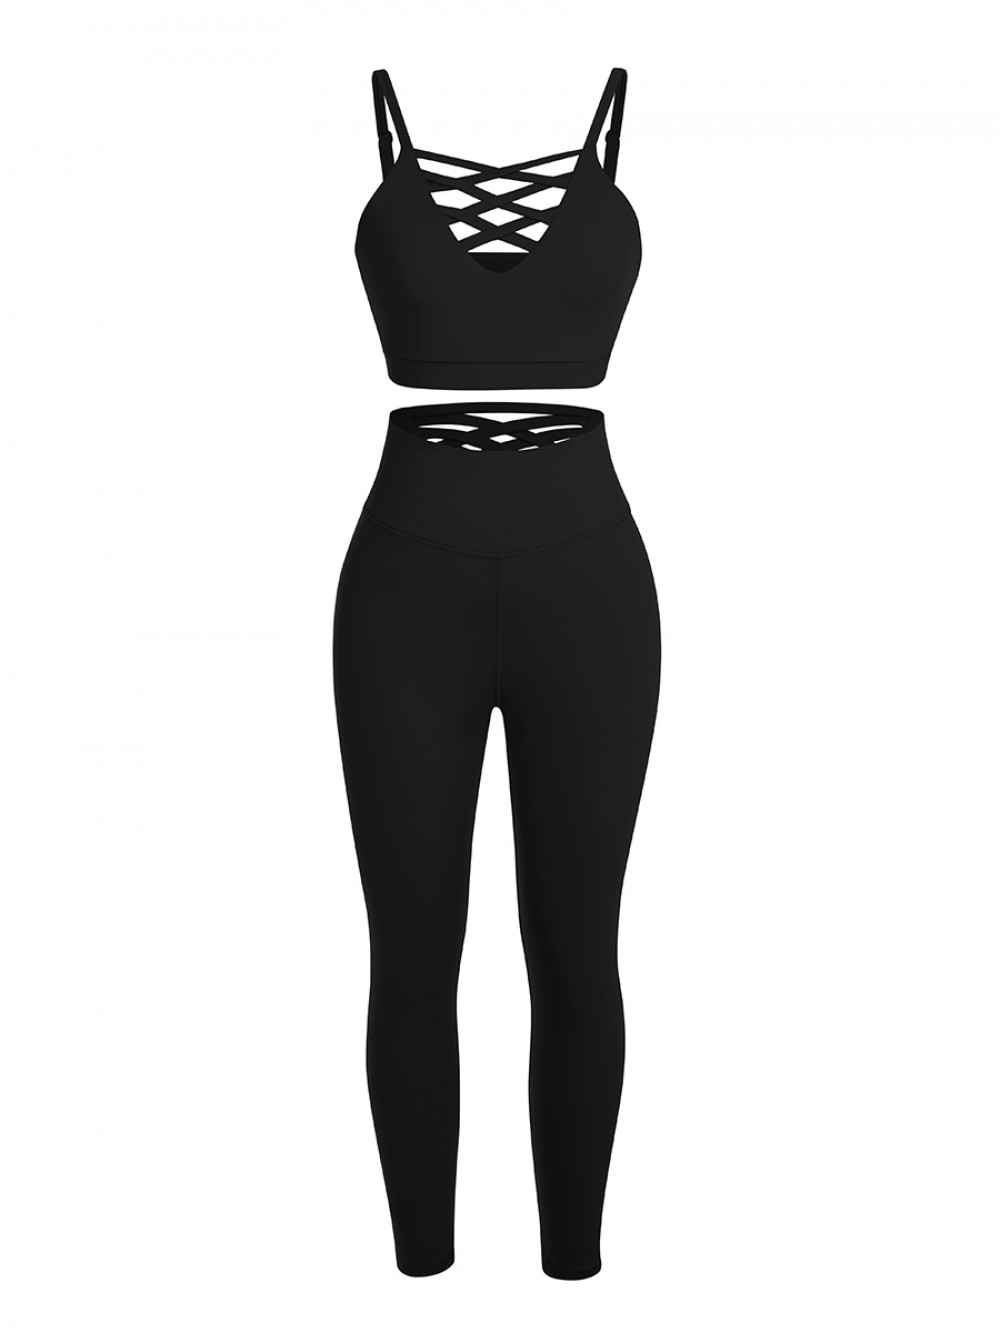 Black Adjustable Straps High Waist Athletic Suit For Running Girl